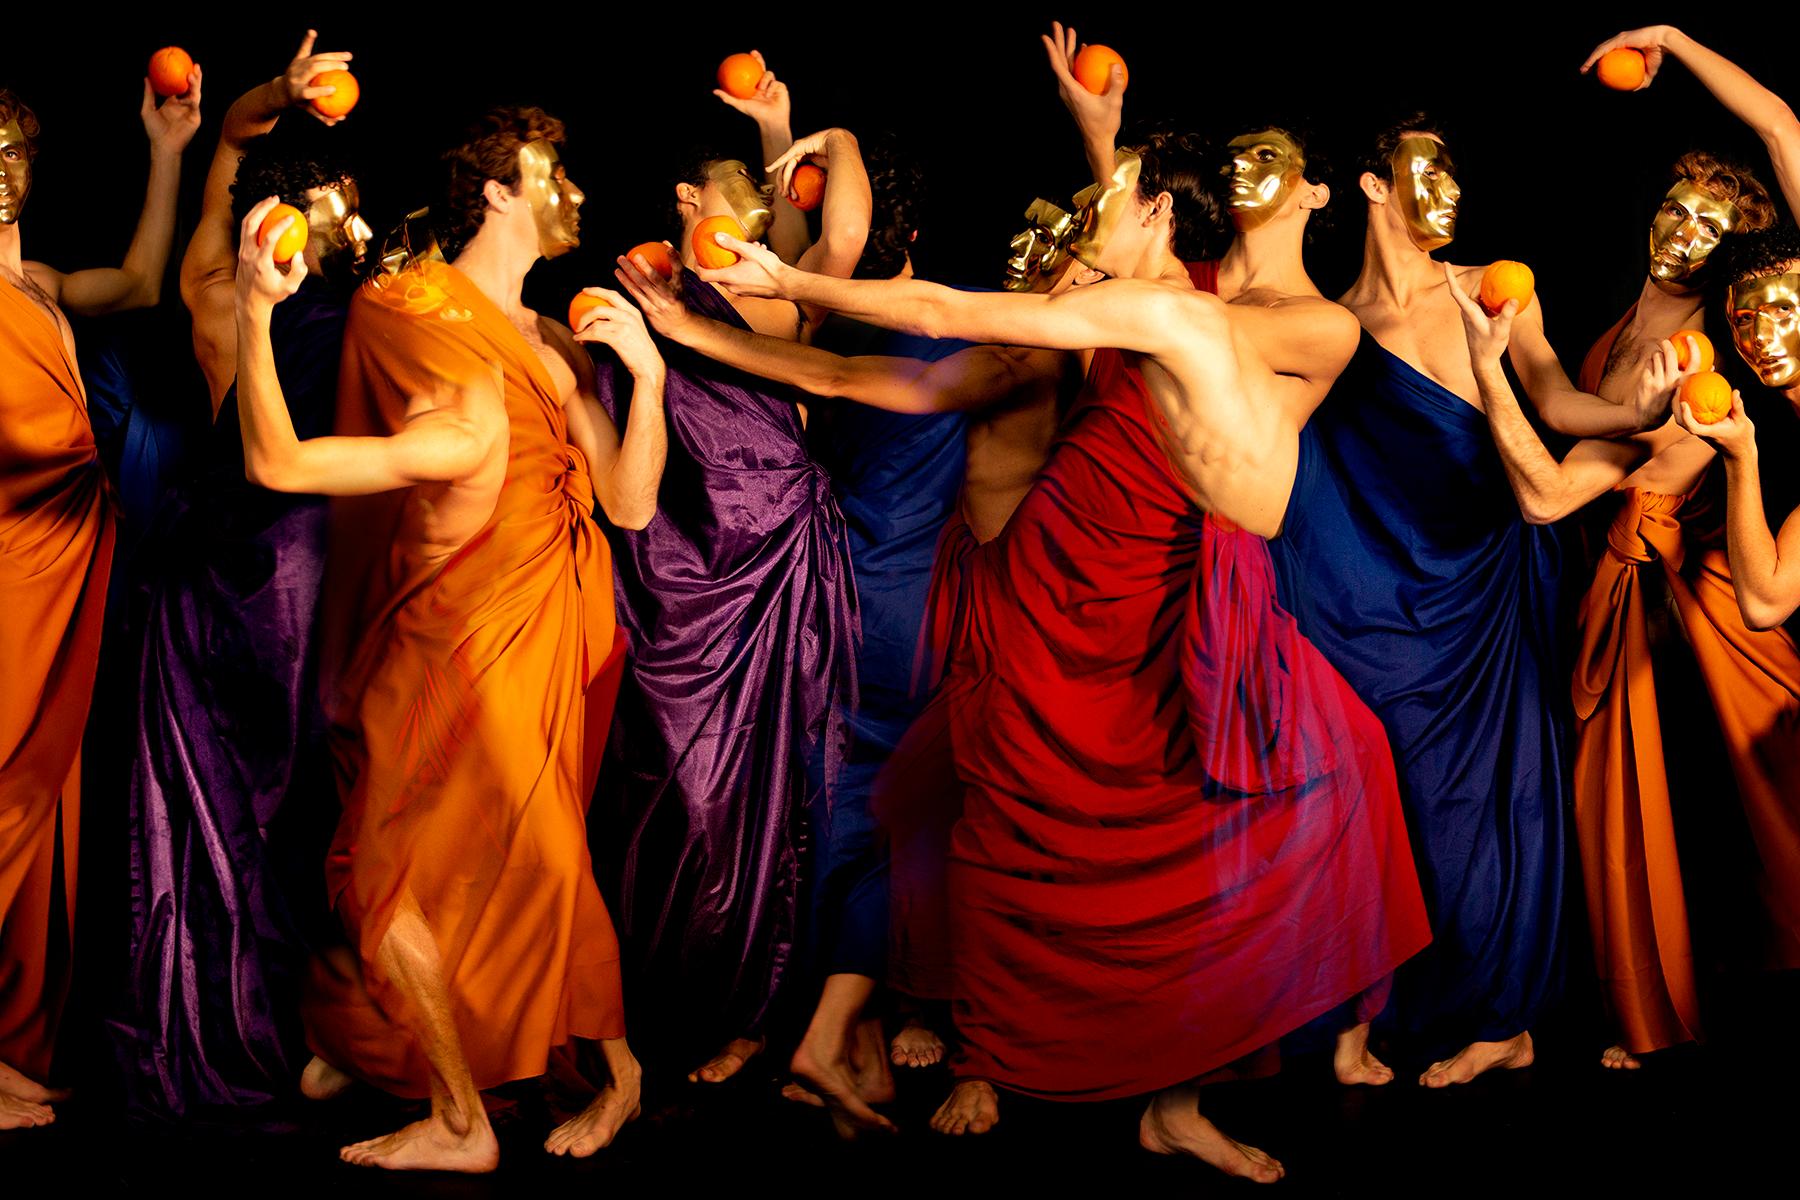 Cuatro. From The series danza de las naranjas. Figurative color photograph